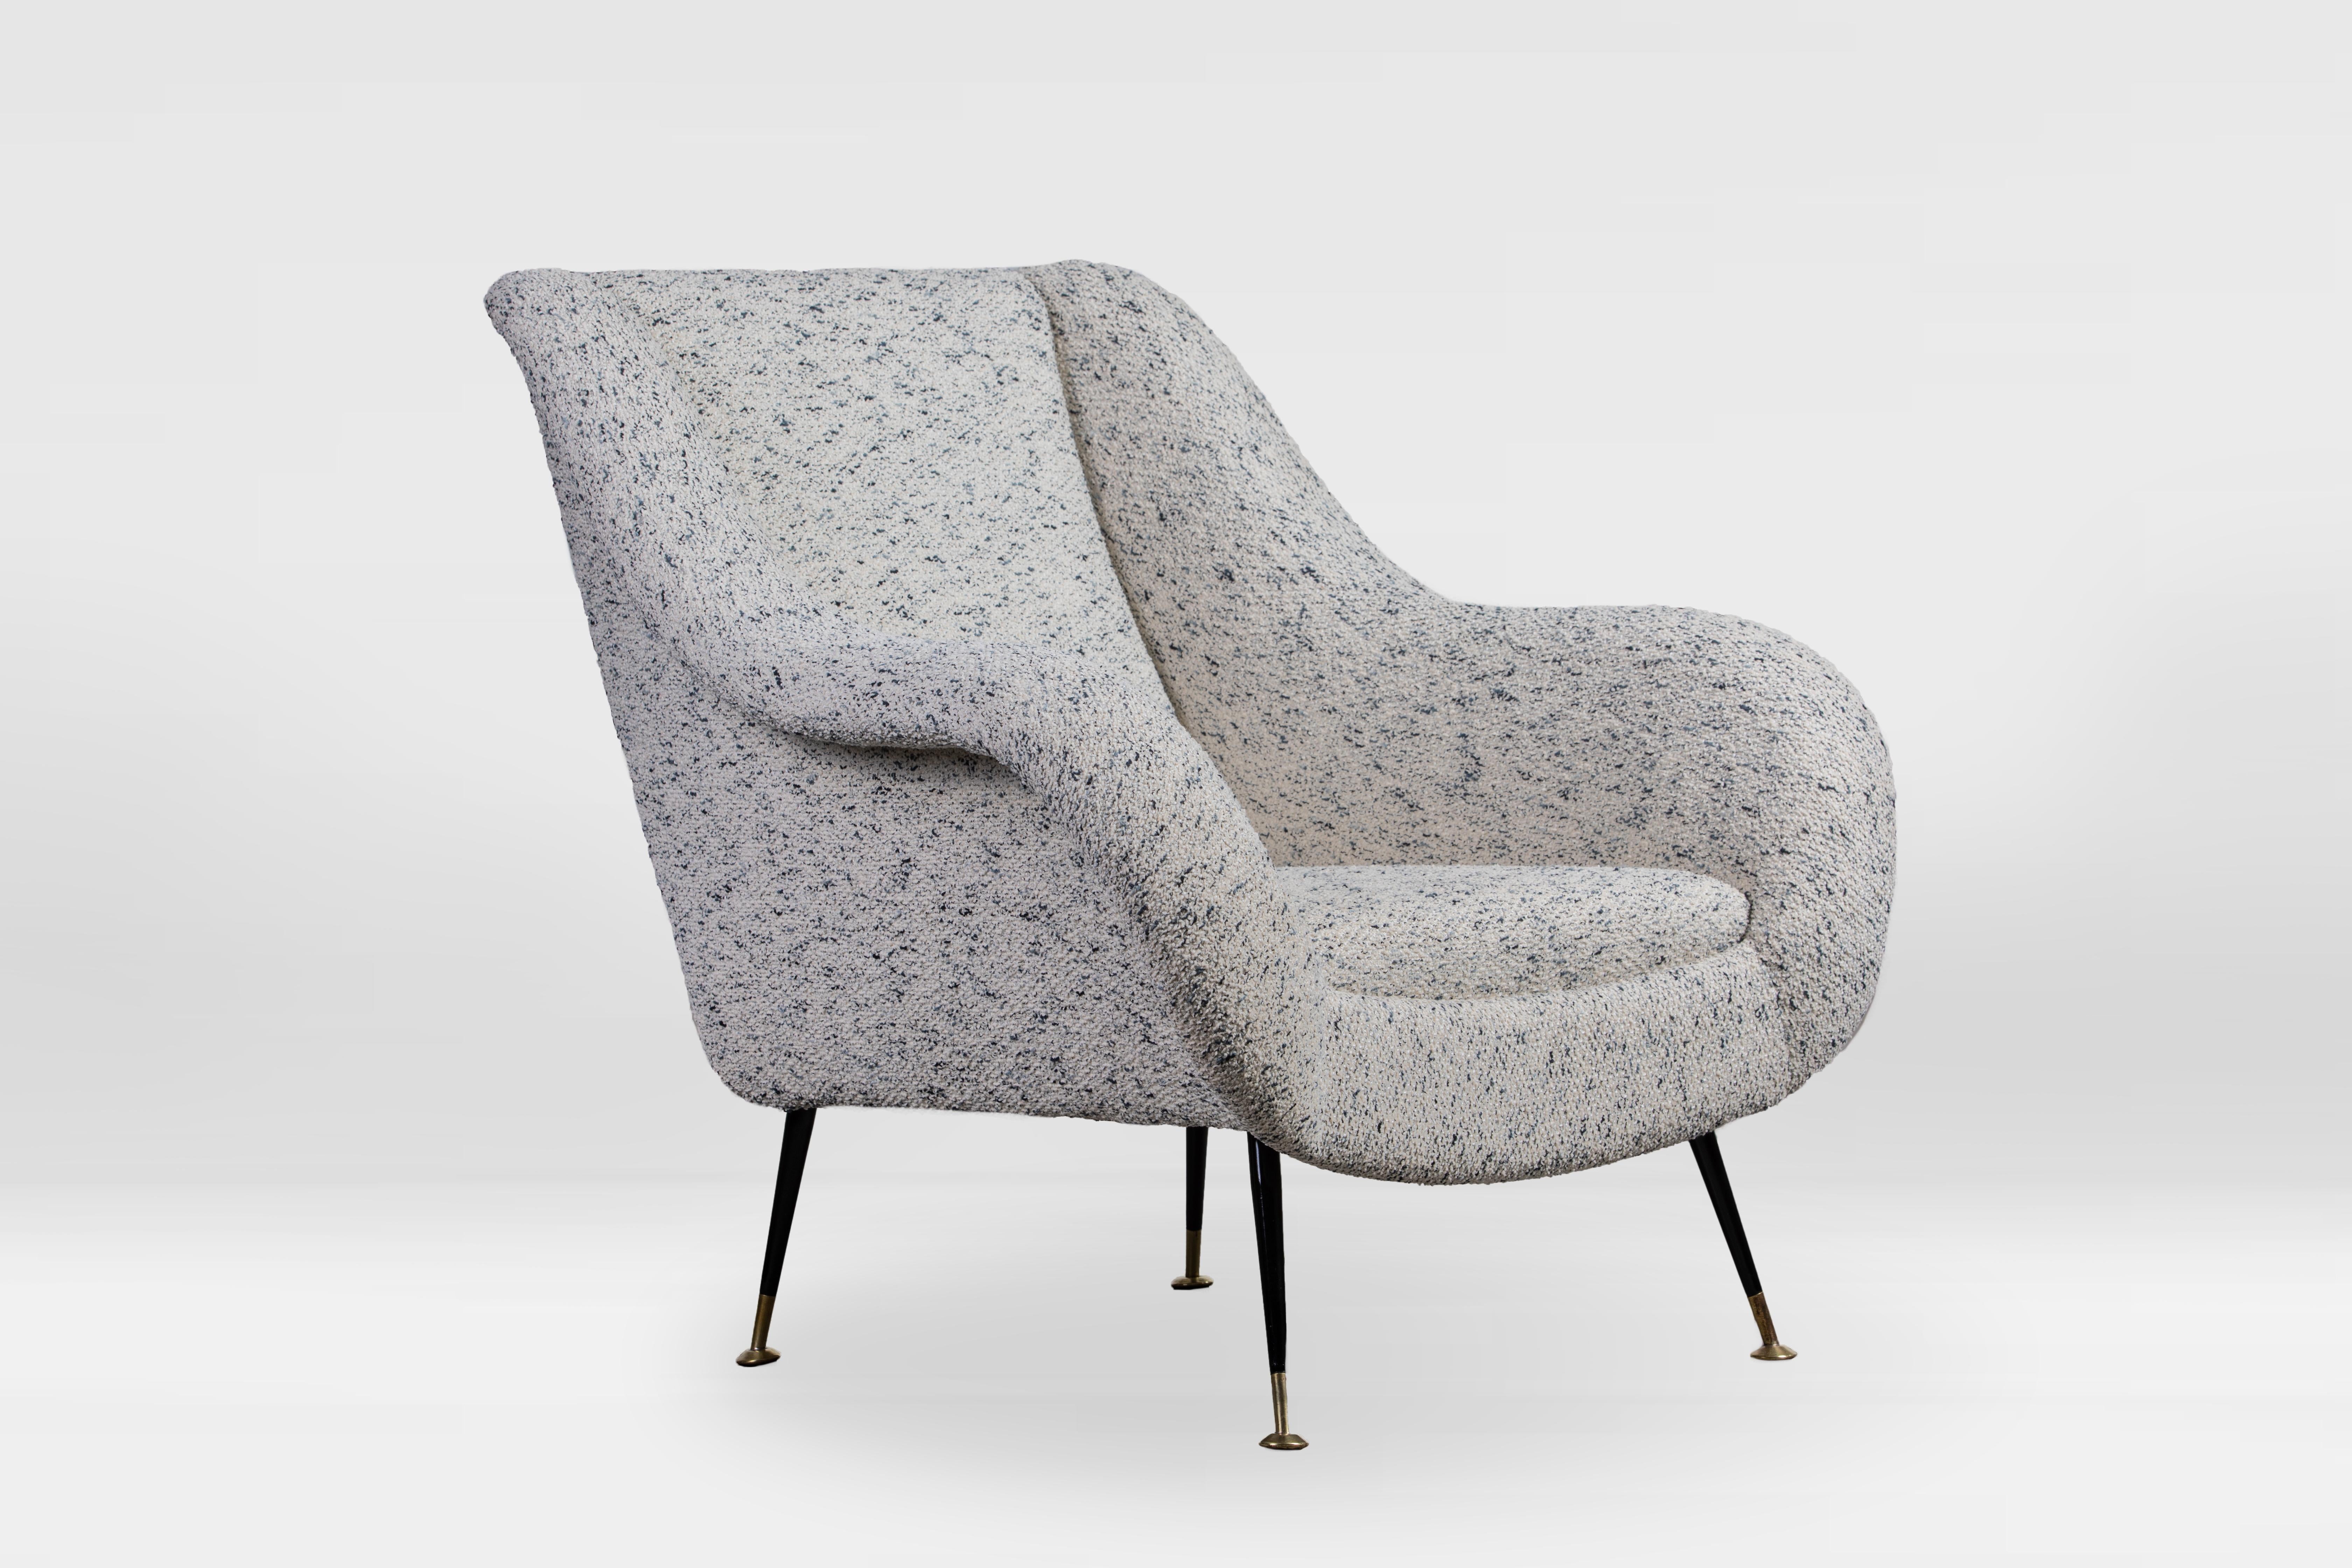 Mid-20th Century Italian Lounge Chair, Gigi Radice for Minotti, in Metaphores Bouclette For Sale